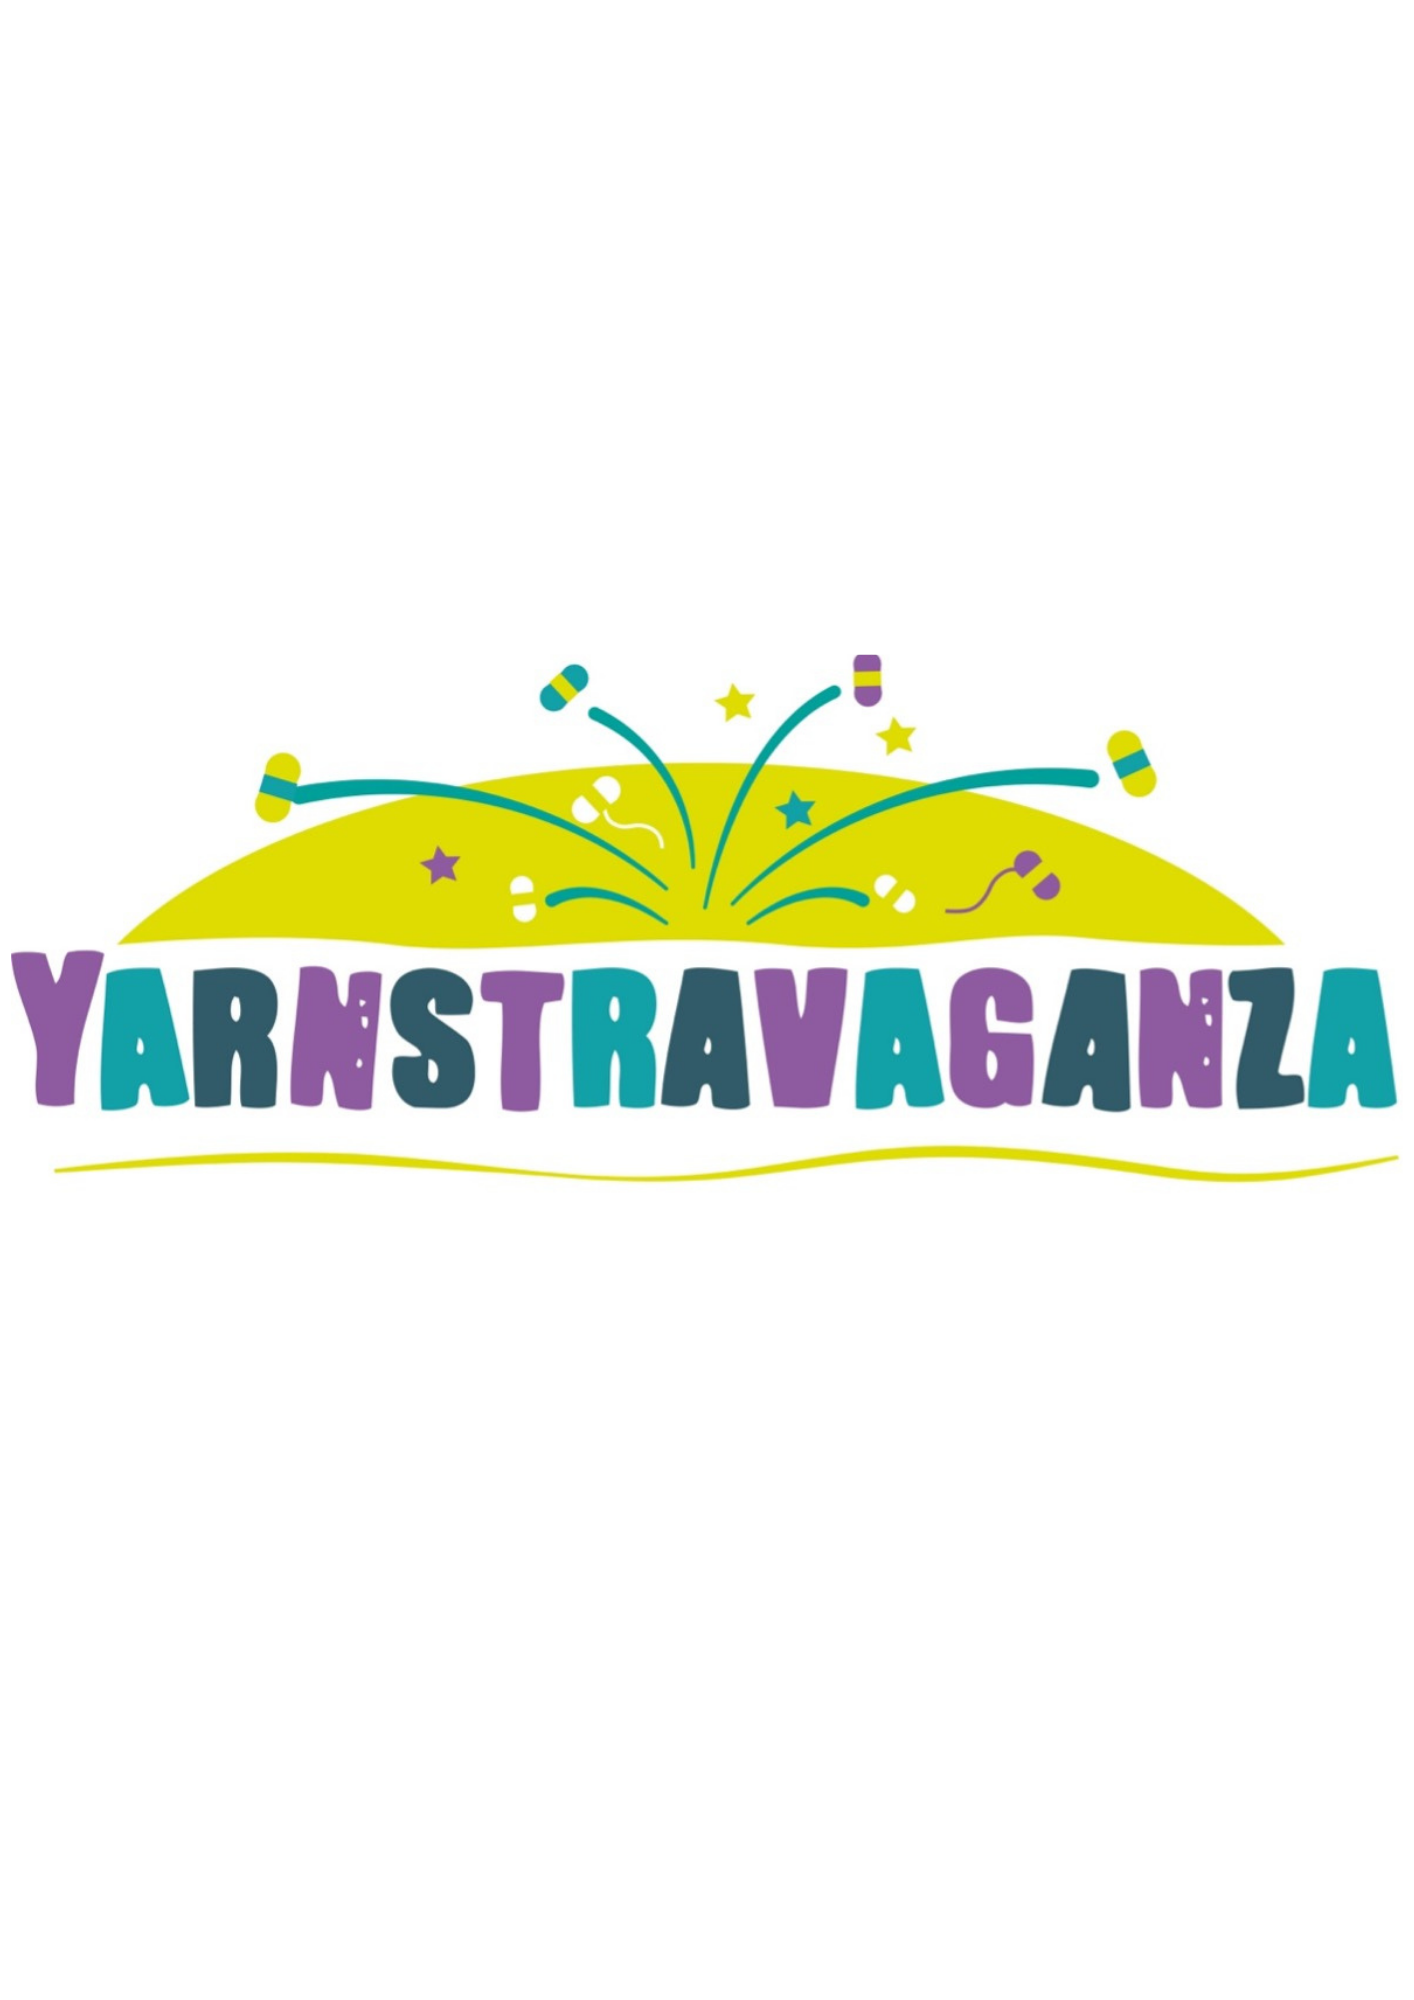 Yarnstravaganza! featured image